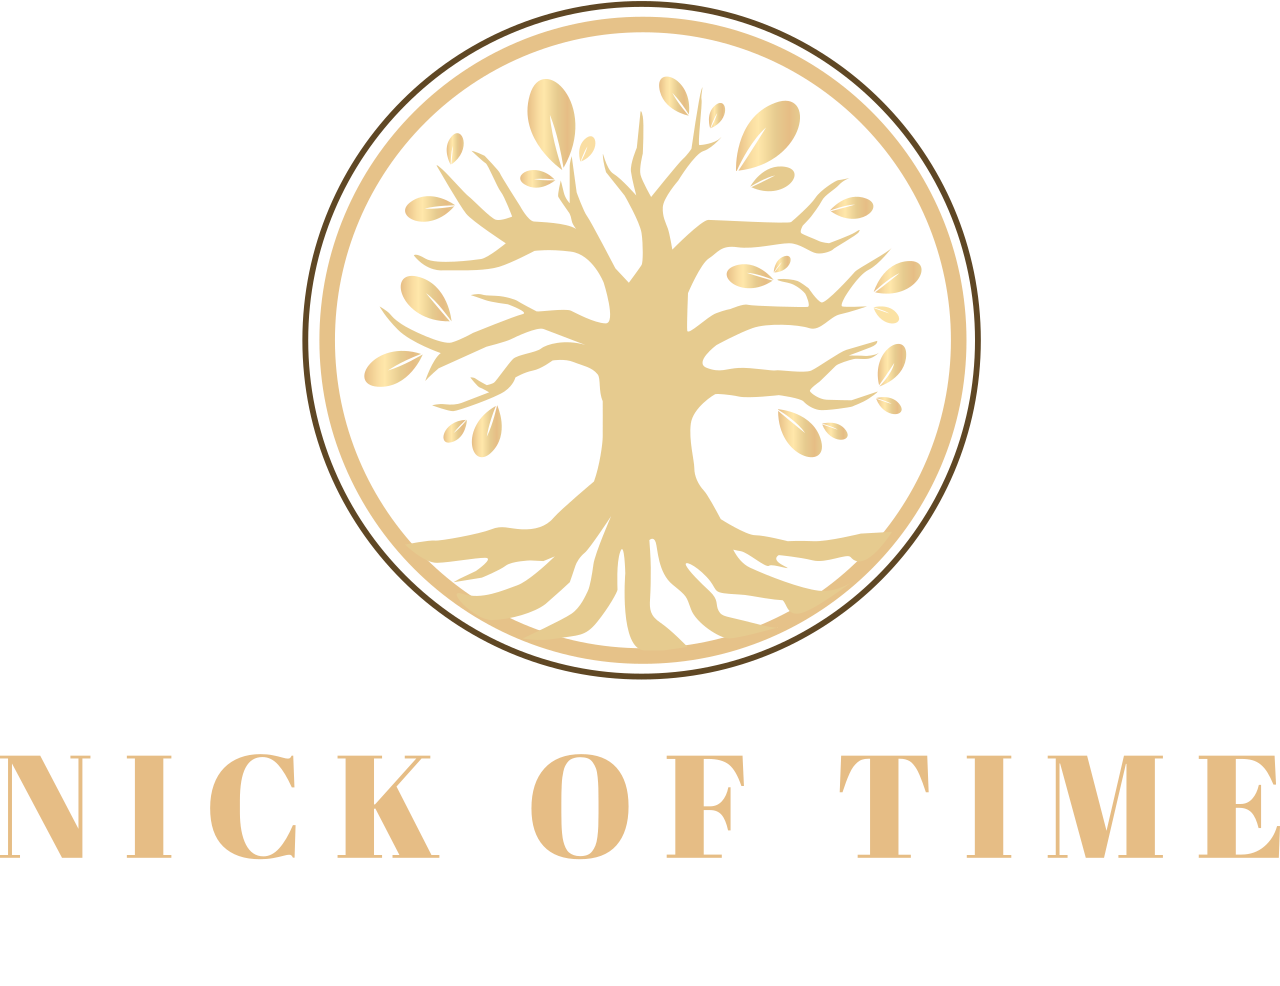 Nick of Time's logo